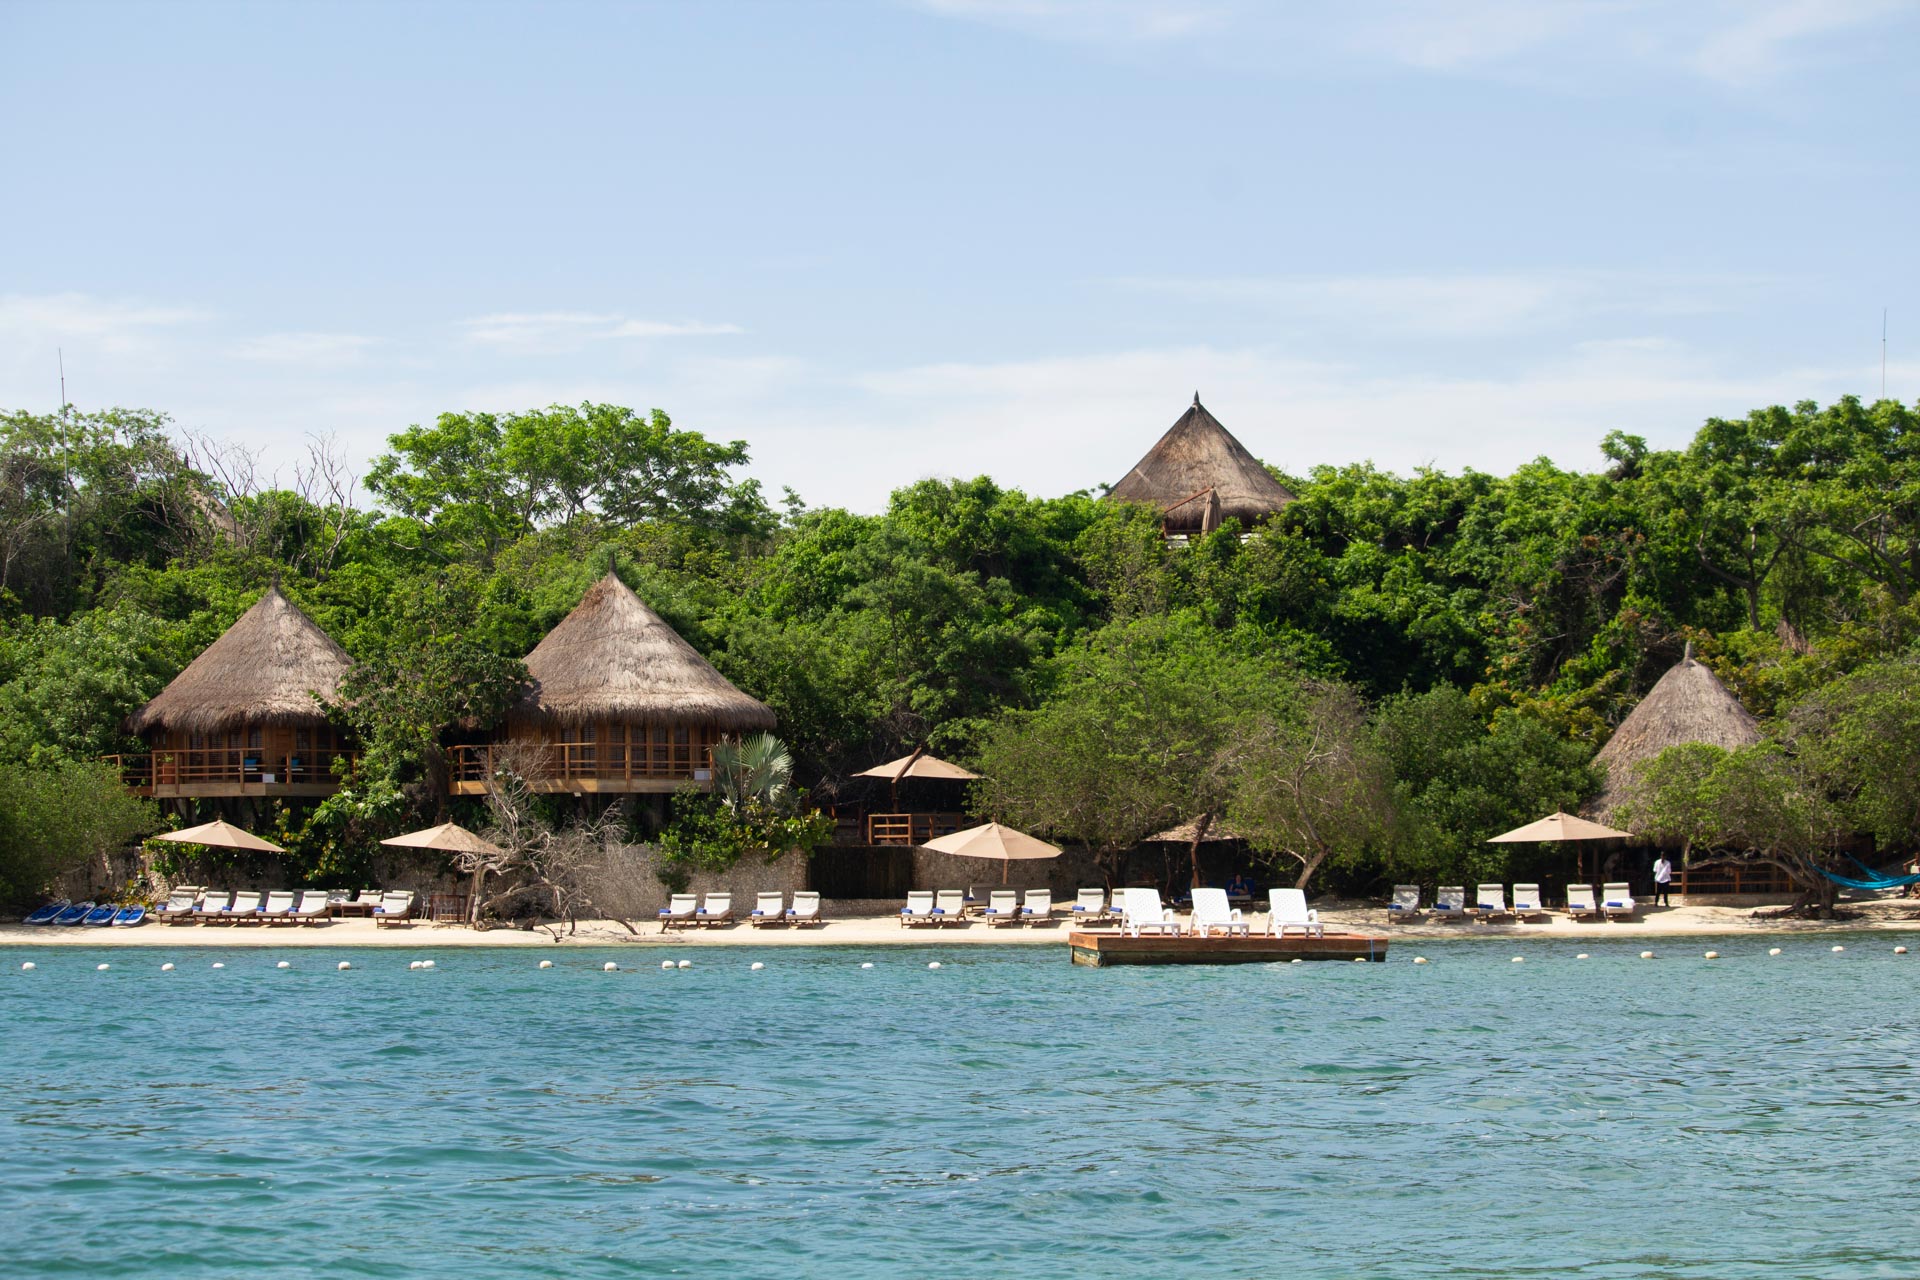 Hotel Las Islas and beach